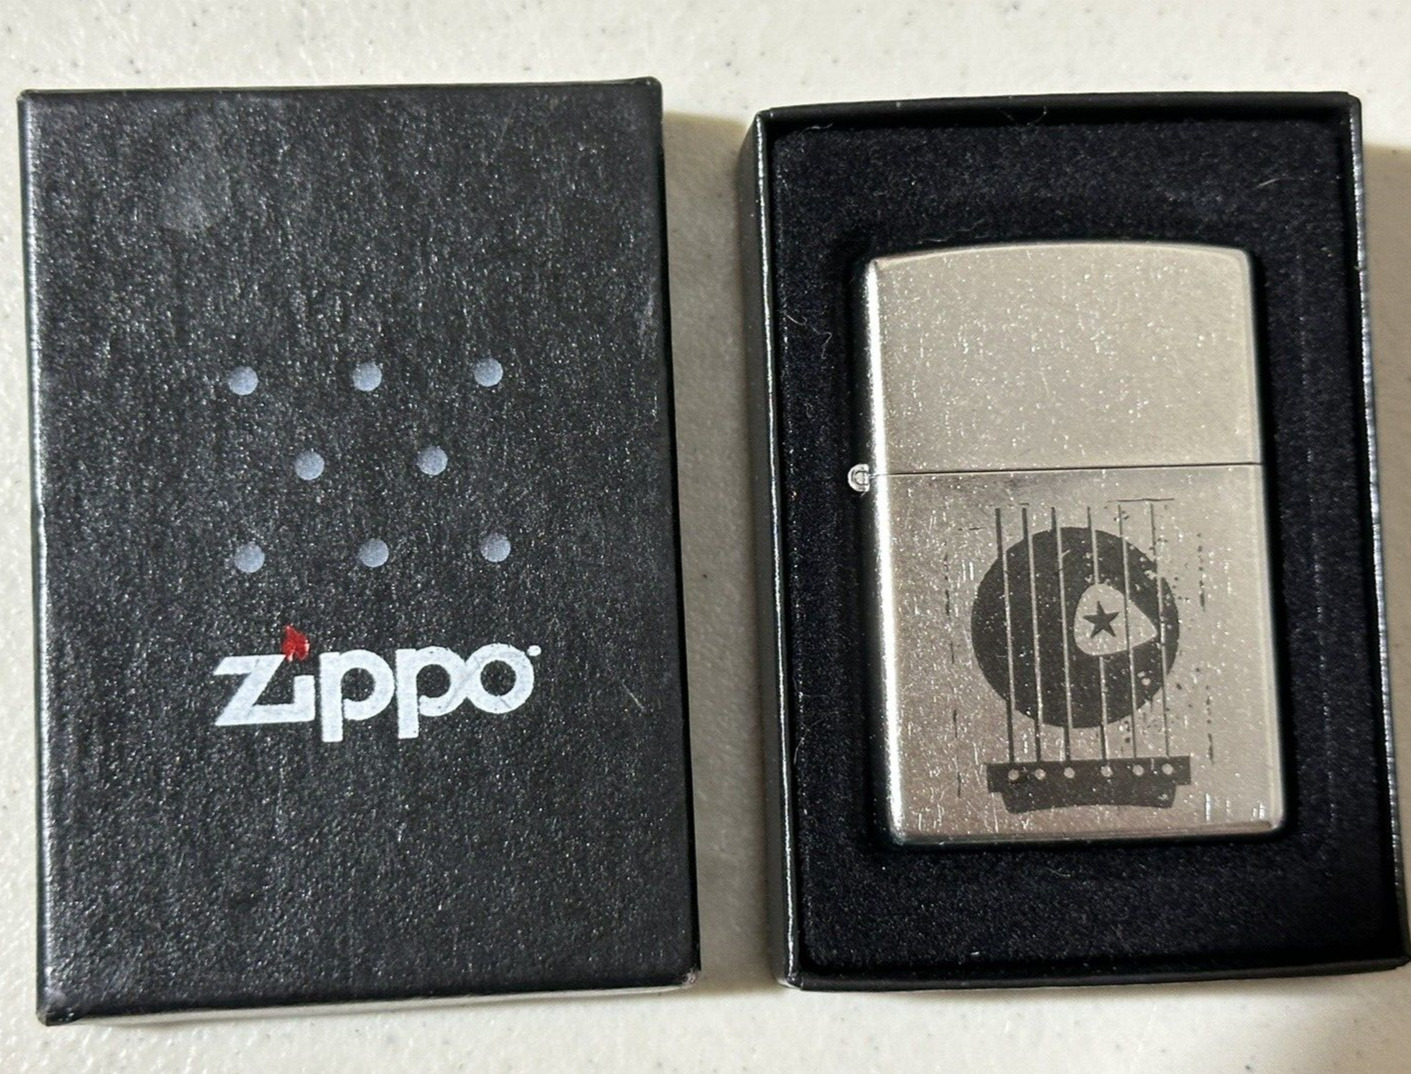 Zippo 2008 Guitar Design Lighter New Sealed Condition